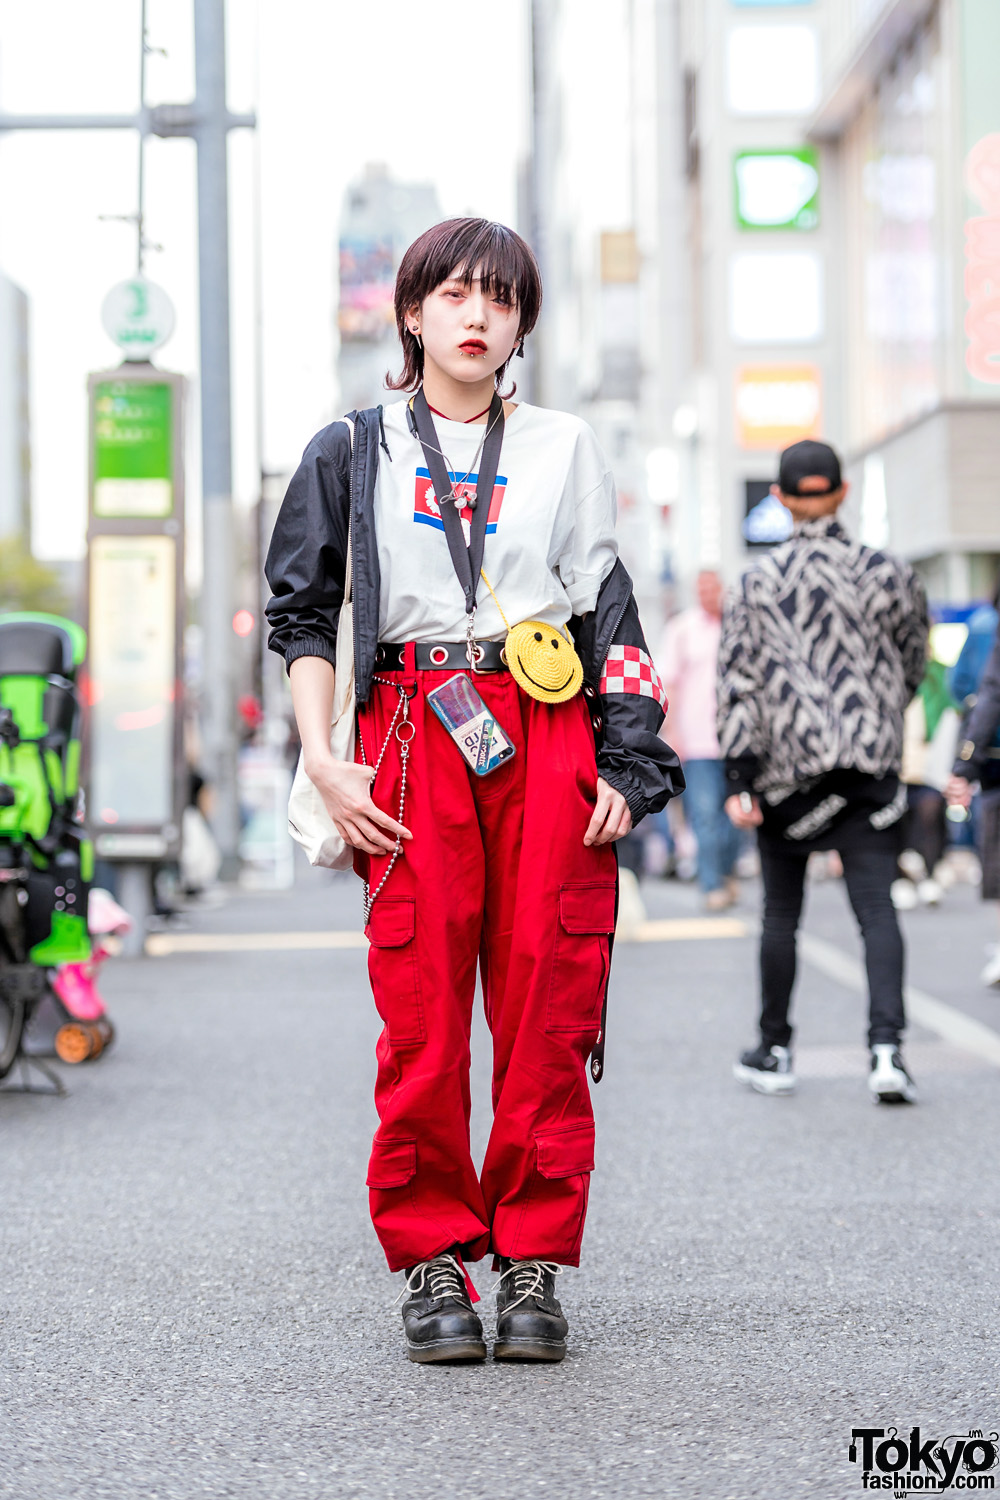 Polo Ralph Lauren Jacket, Resistance Top, Faith Tokyo Pants & Dr. Martens Boots in Harajuku